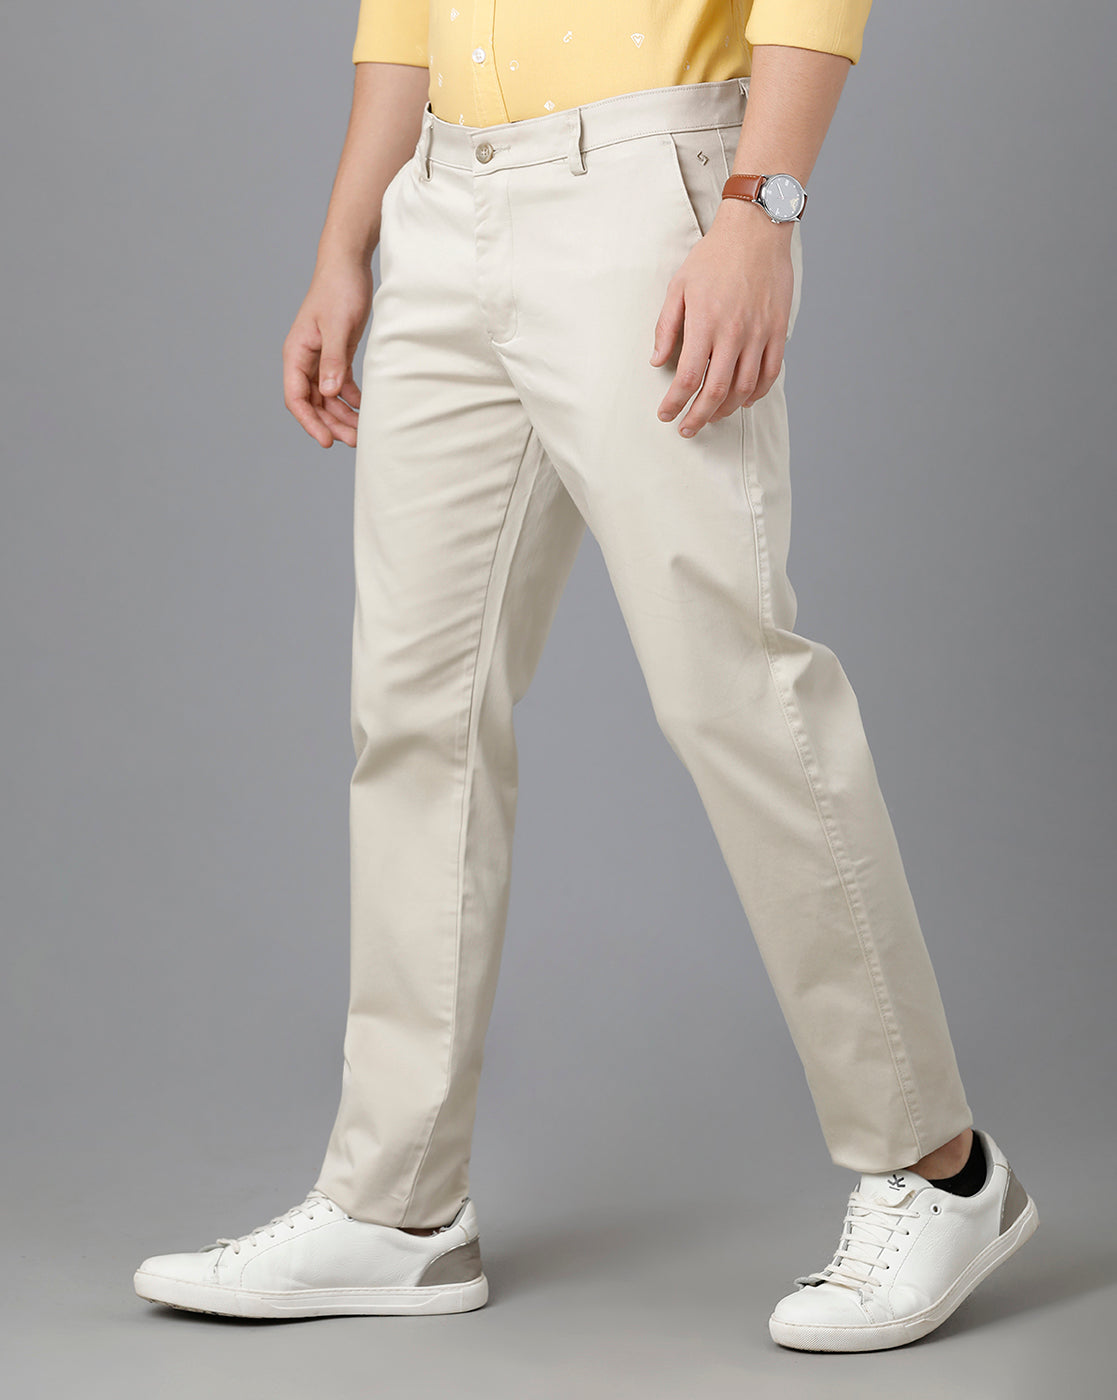 Khaki Pants For Men An Ultimate Guide  Alex Righetto